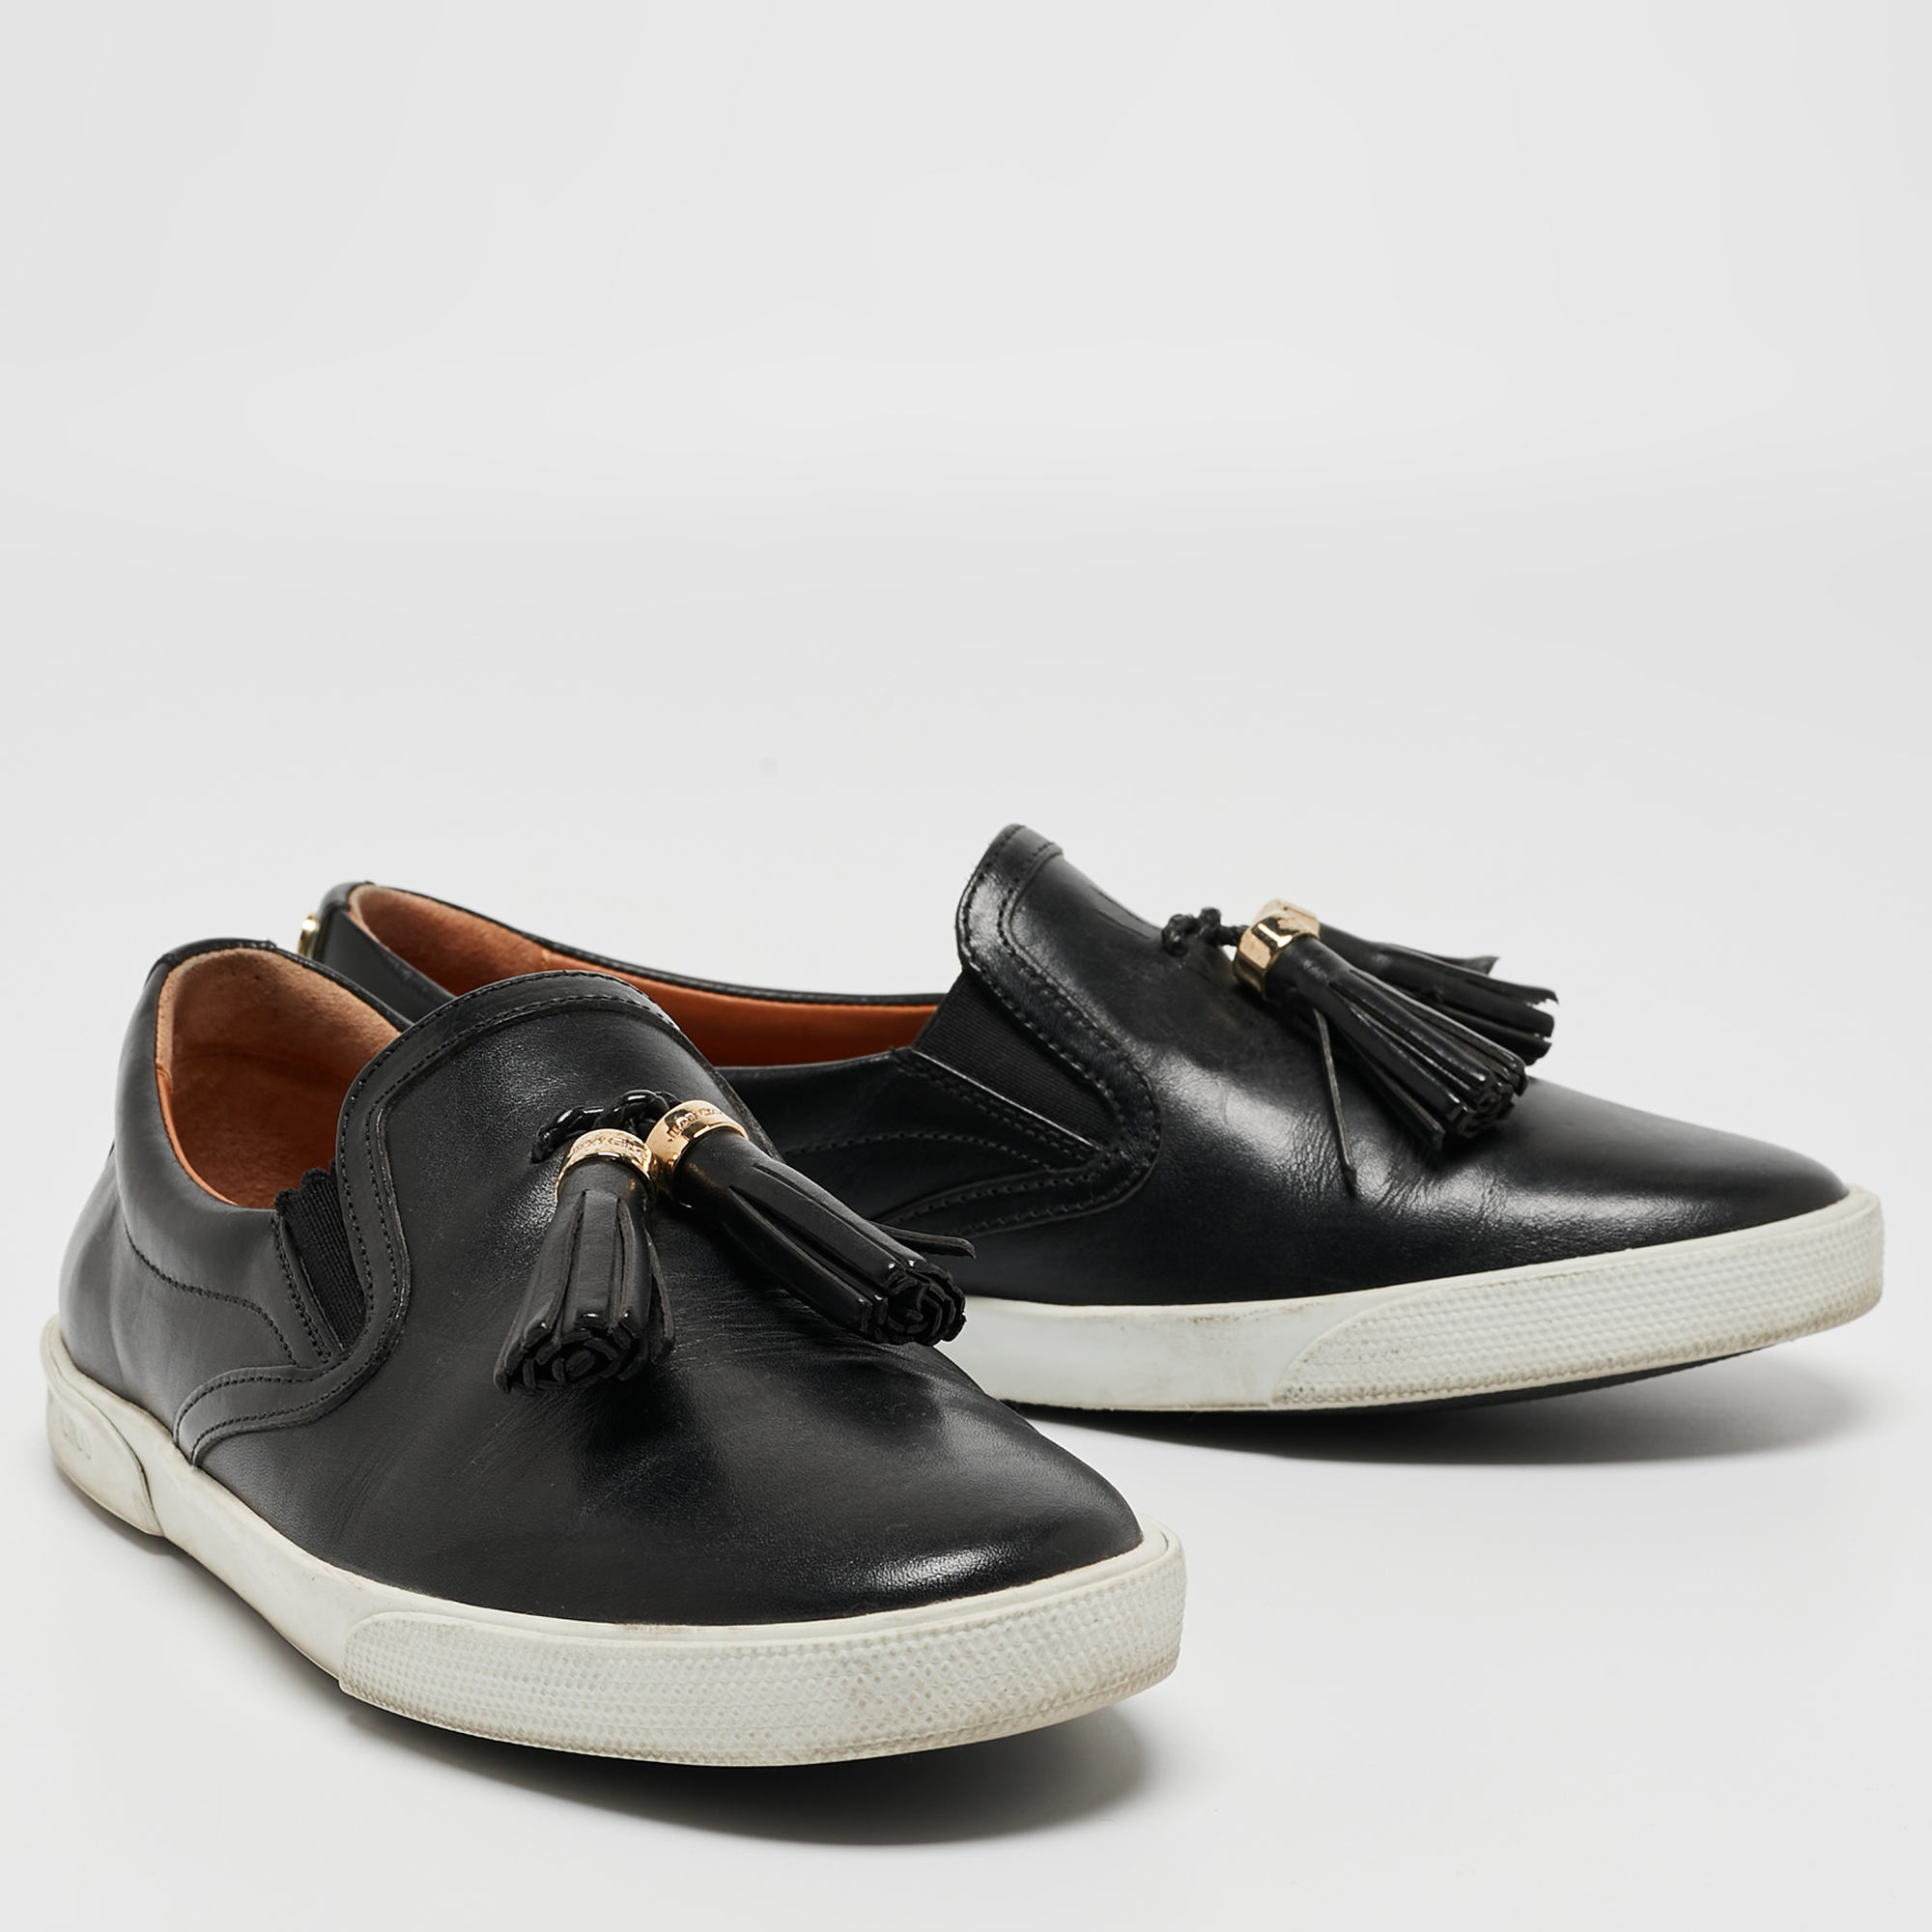 Jimmy Choo Black Leather  Fringes Tassels Loafers Size 37